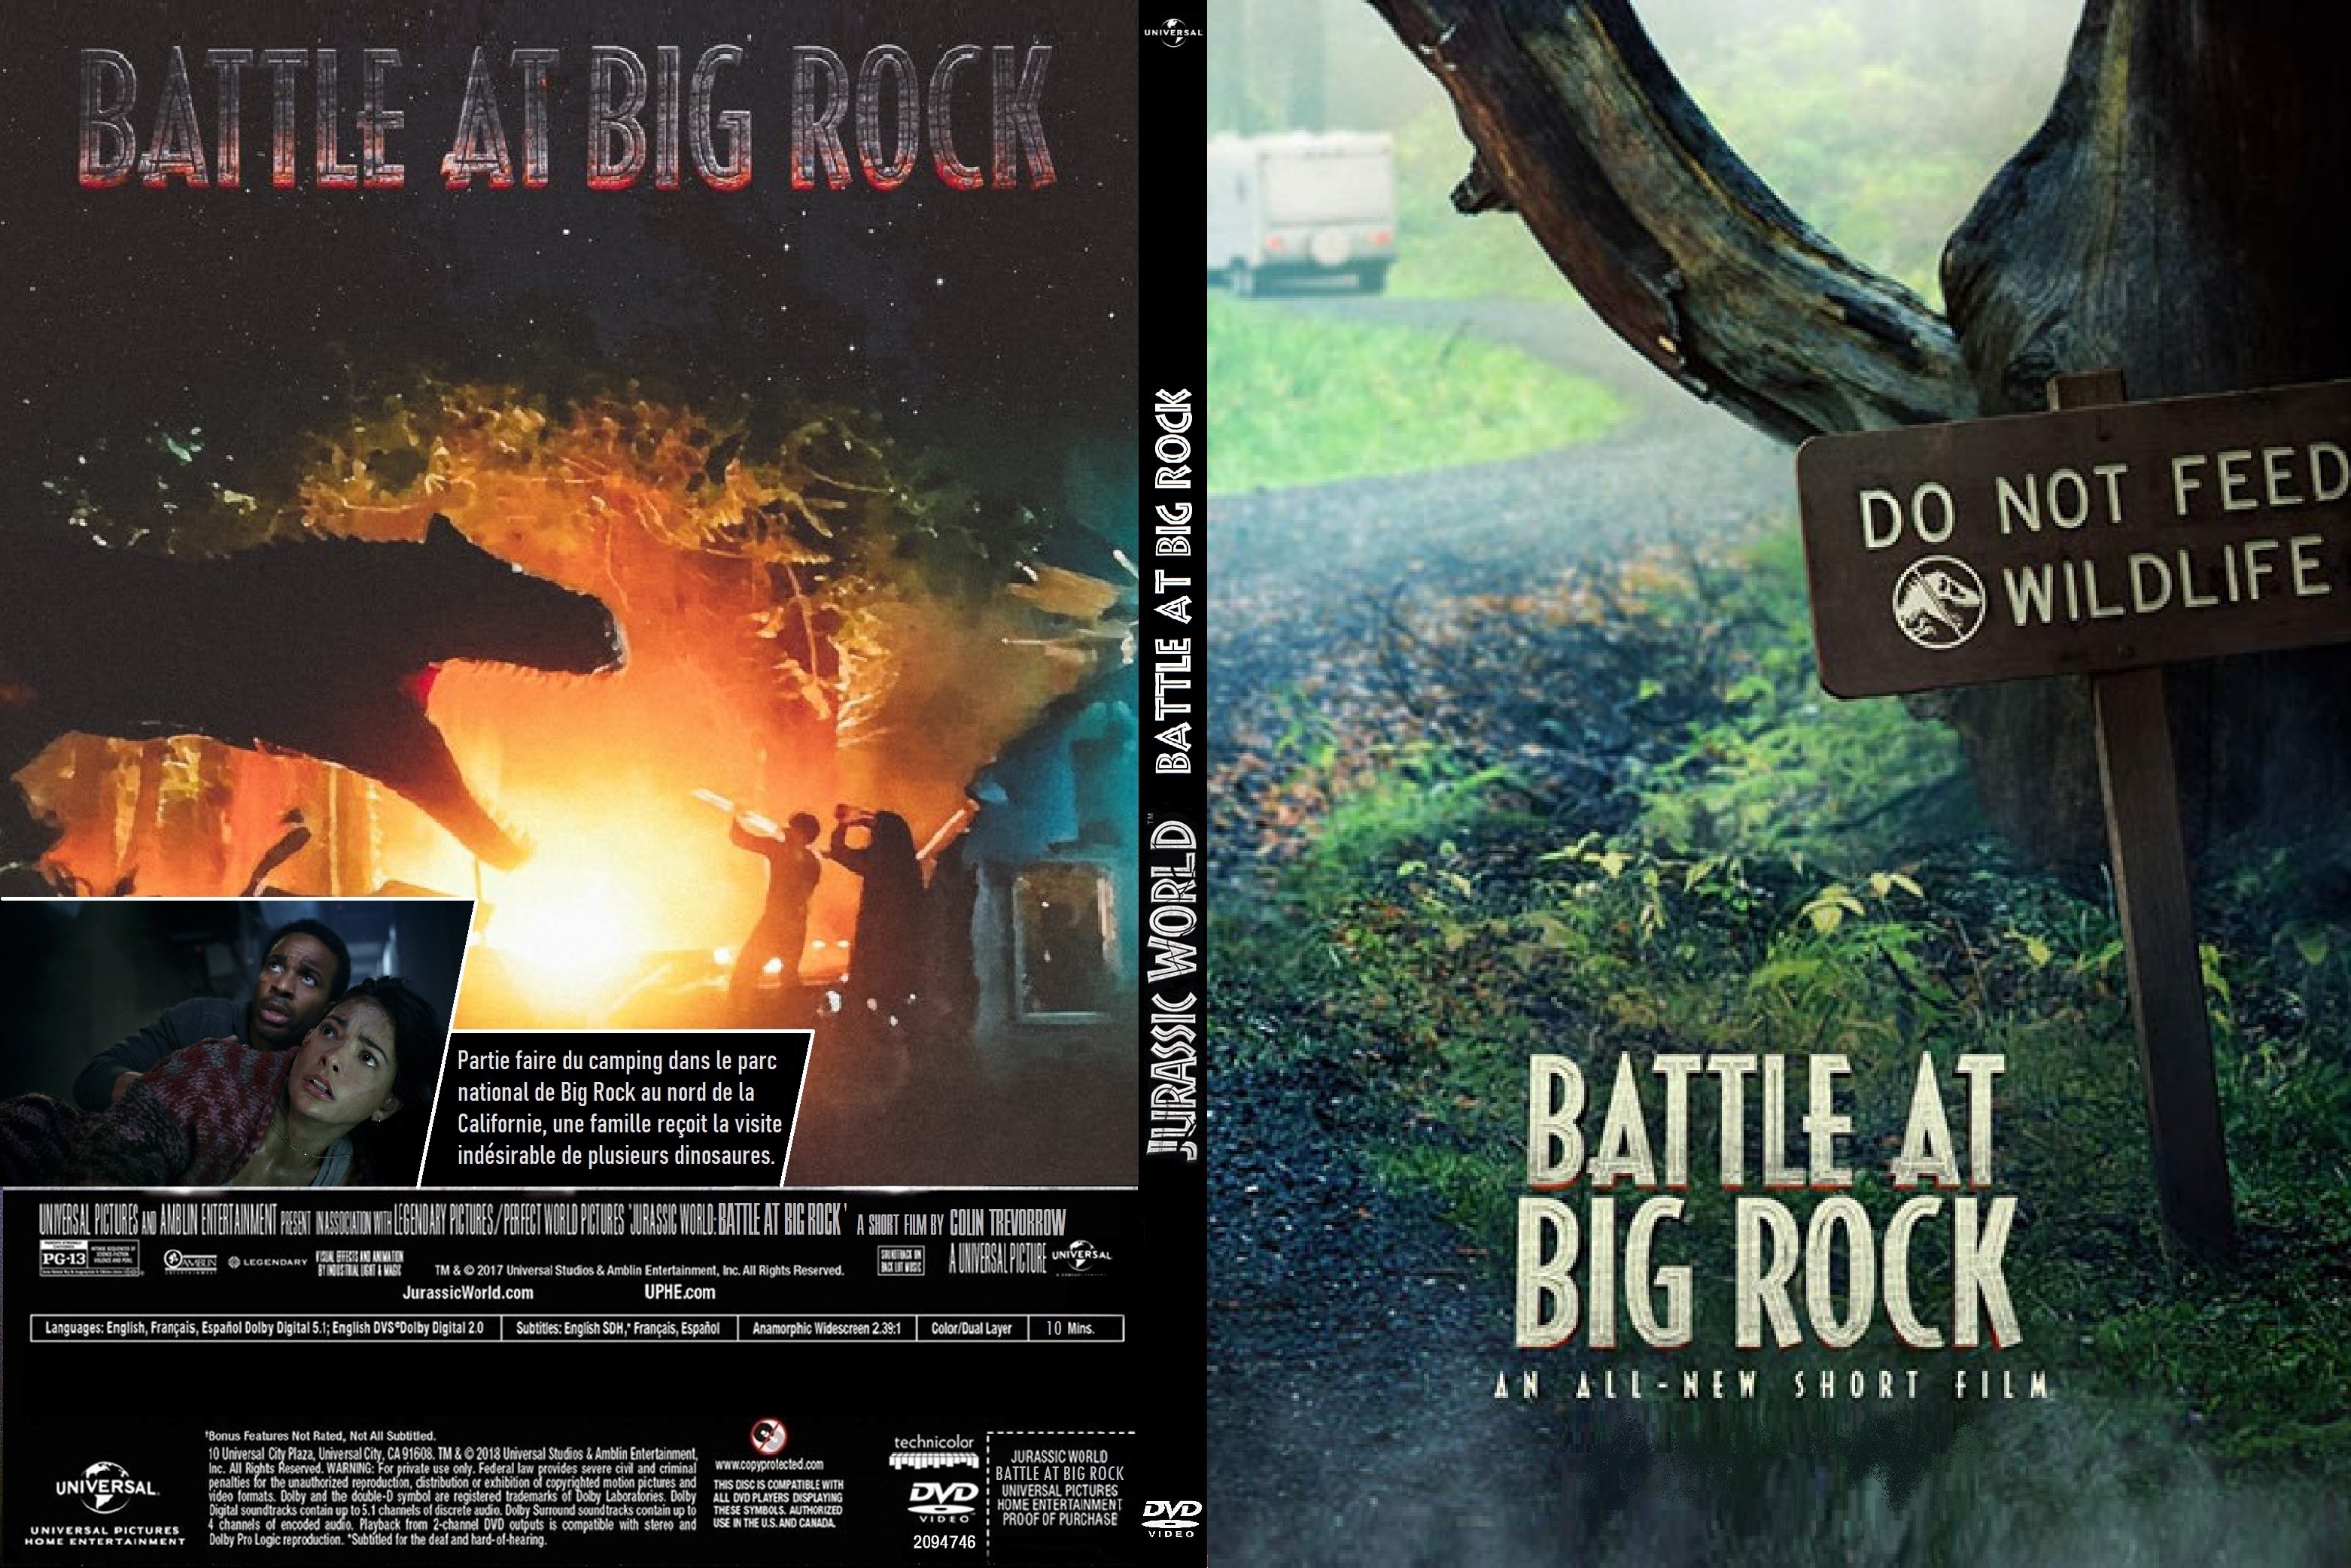 Jaquette DVD Jurassic World Battle at Big Rock custom v3